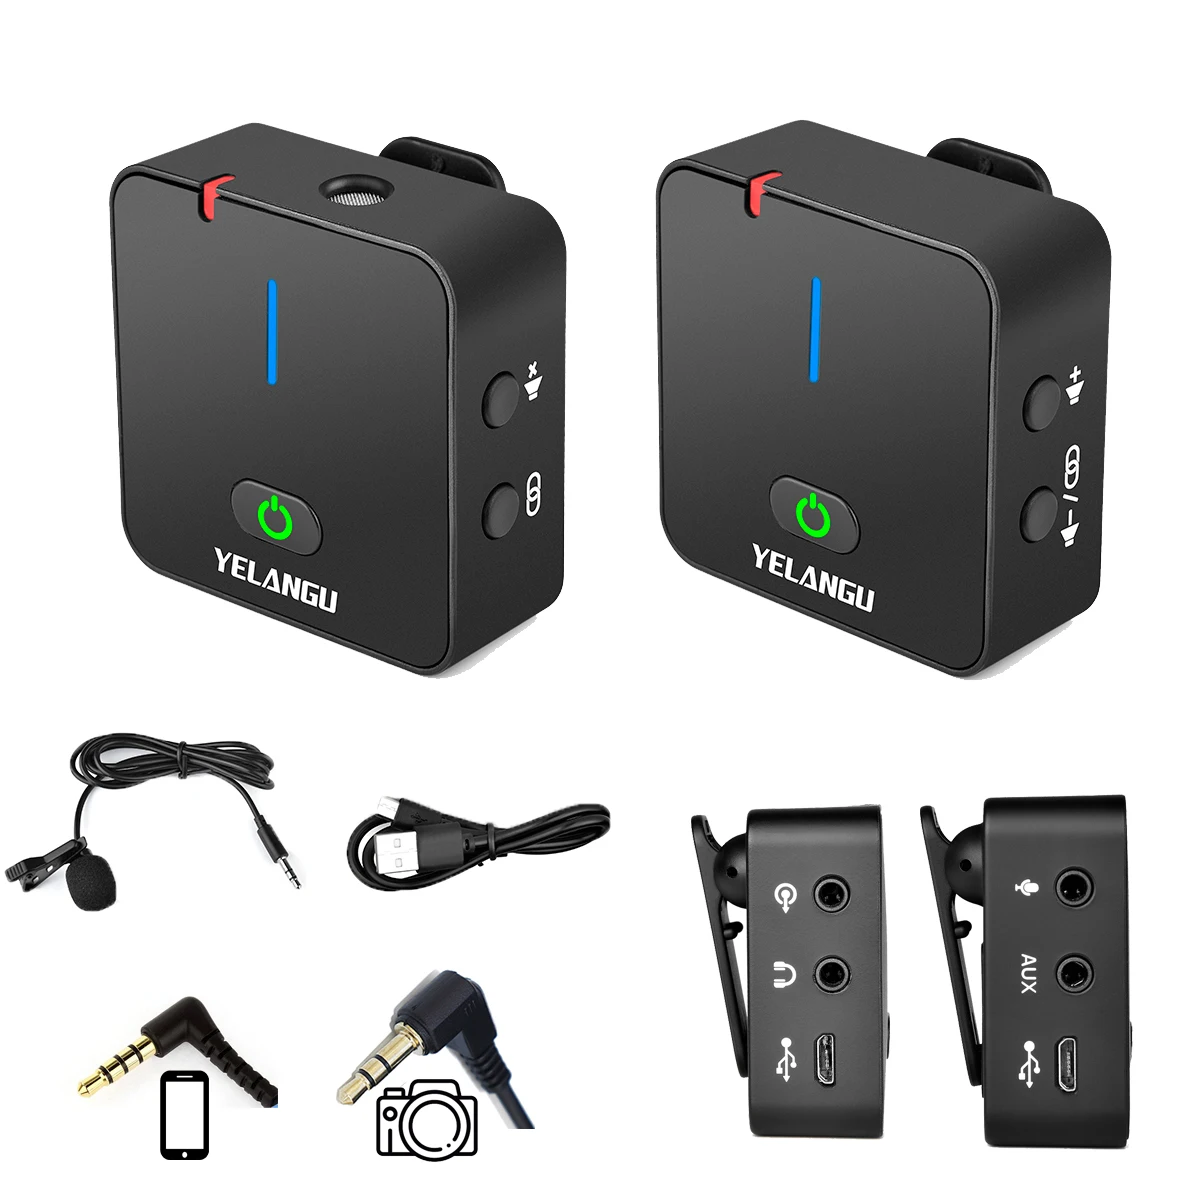 

YELANGU Portable Handheld Lavalier Video Camera 2.4G Wireless Recording Microphone MX5